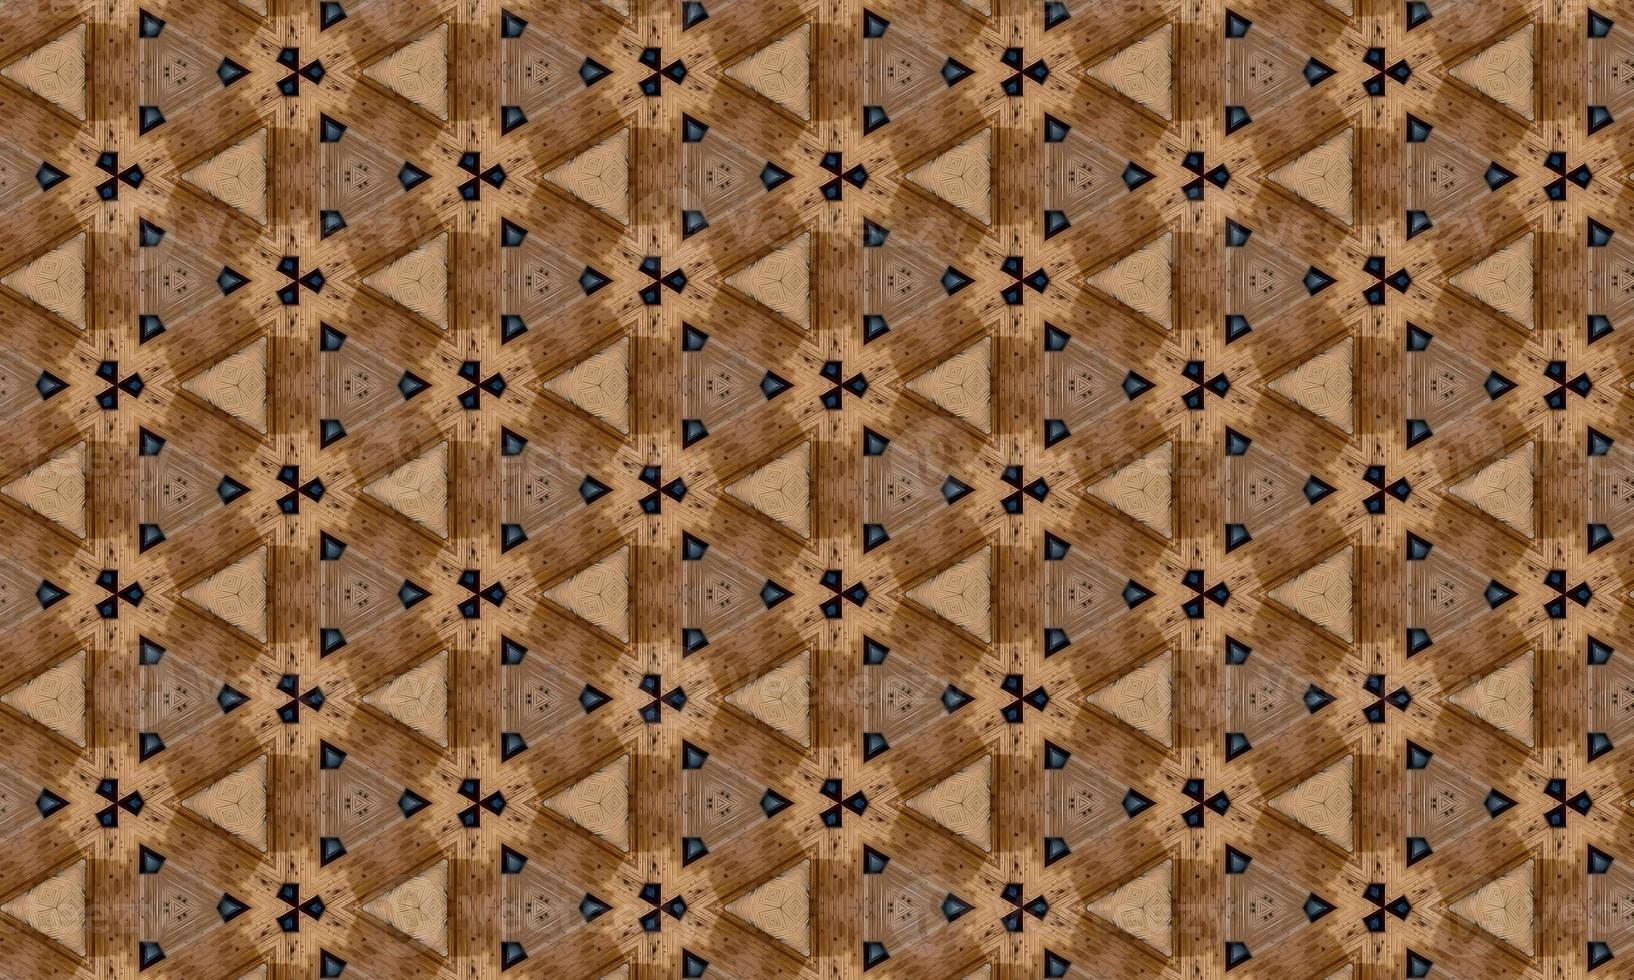 Multicolor mosaic pattern kaleidoscope. background, texture. High quality illustration photo